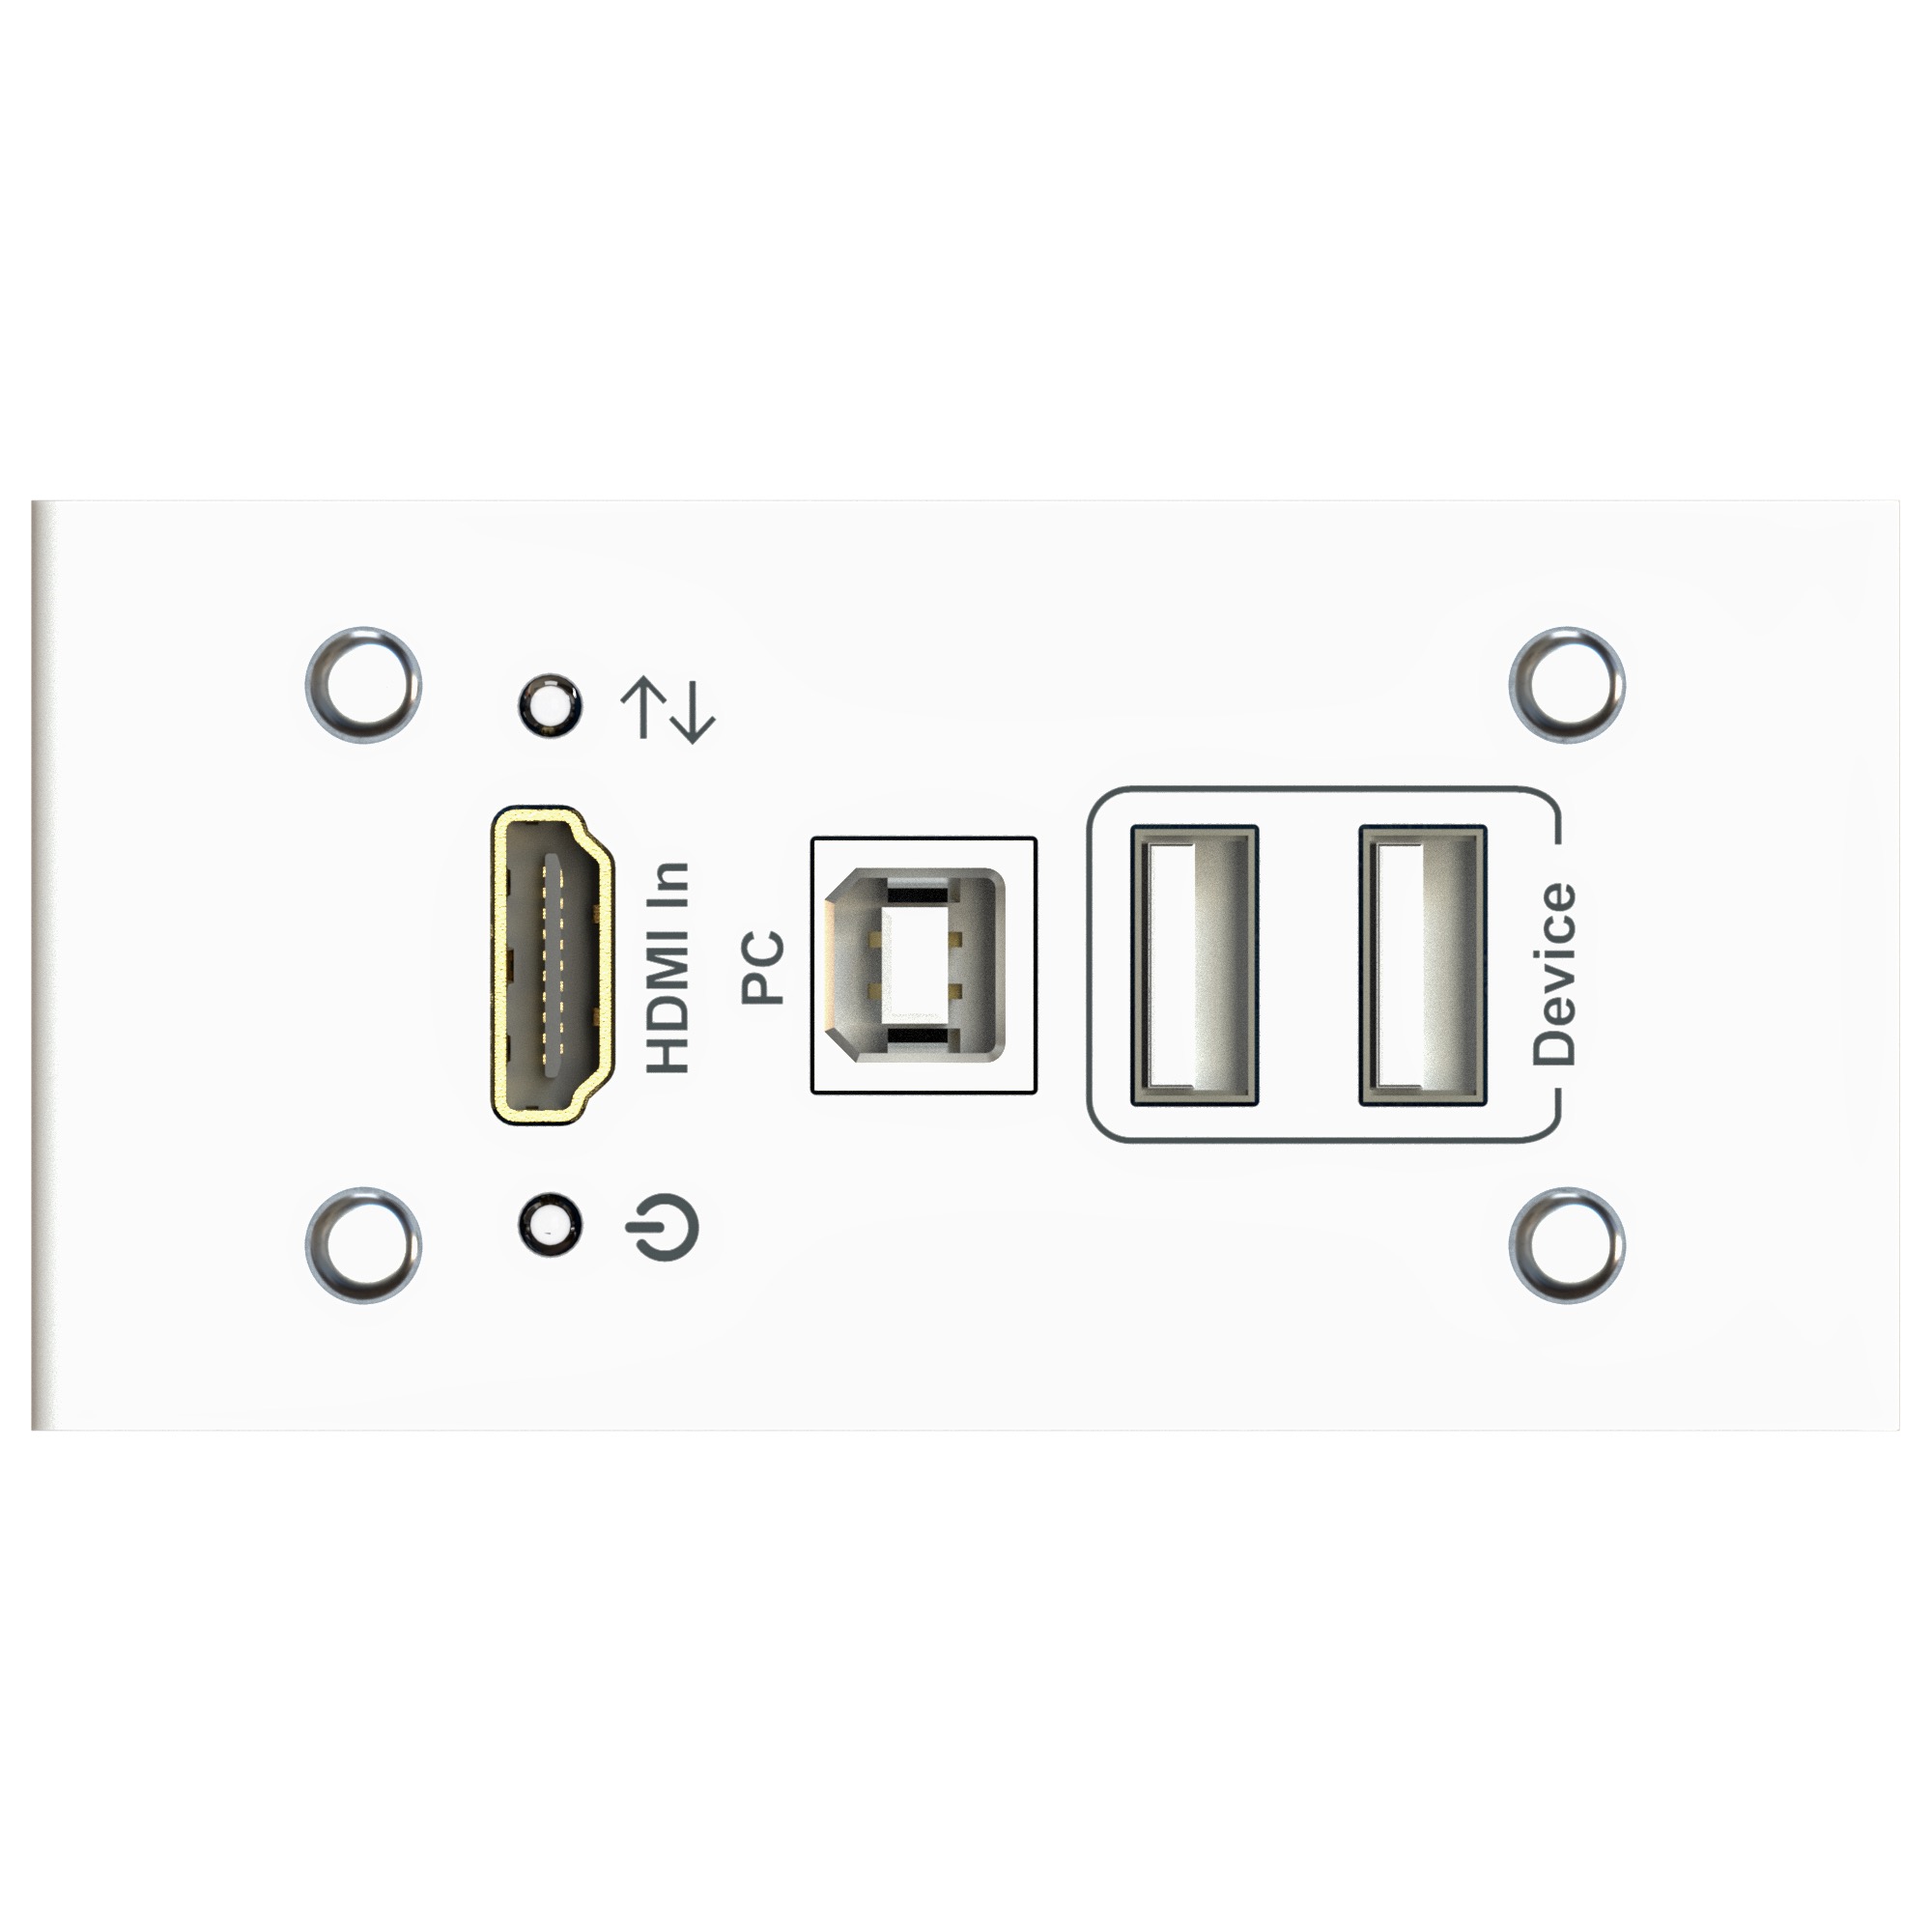 Konnect flex 45 - HDMI USB Transmitter